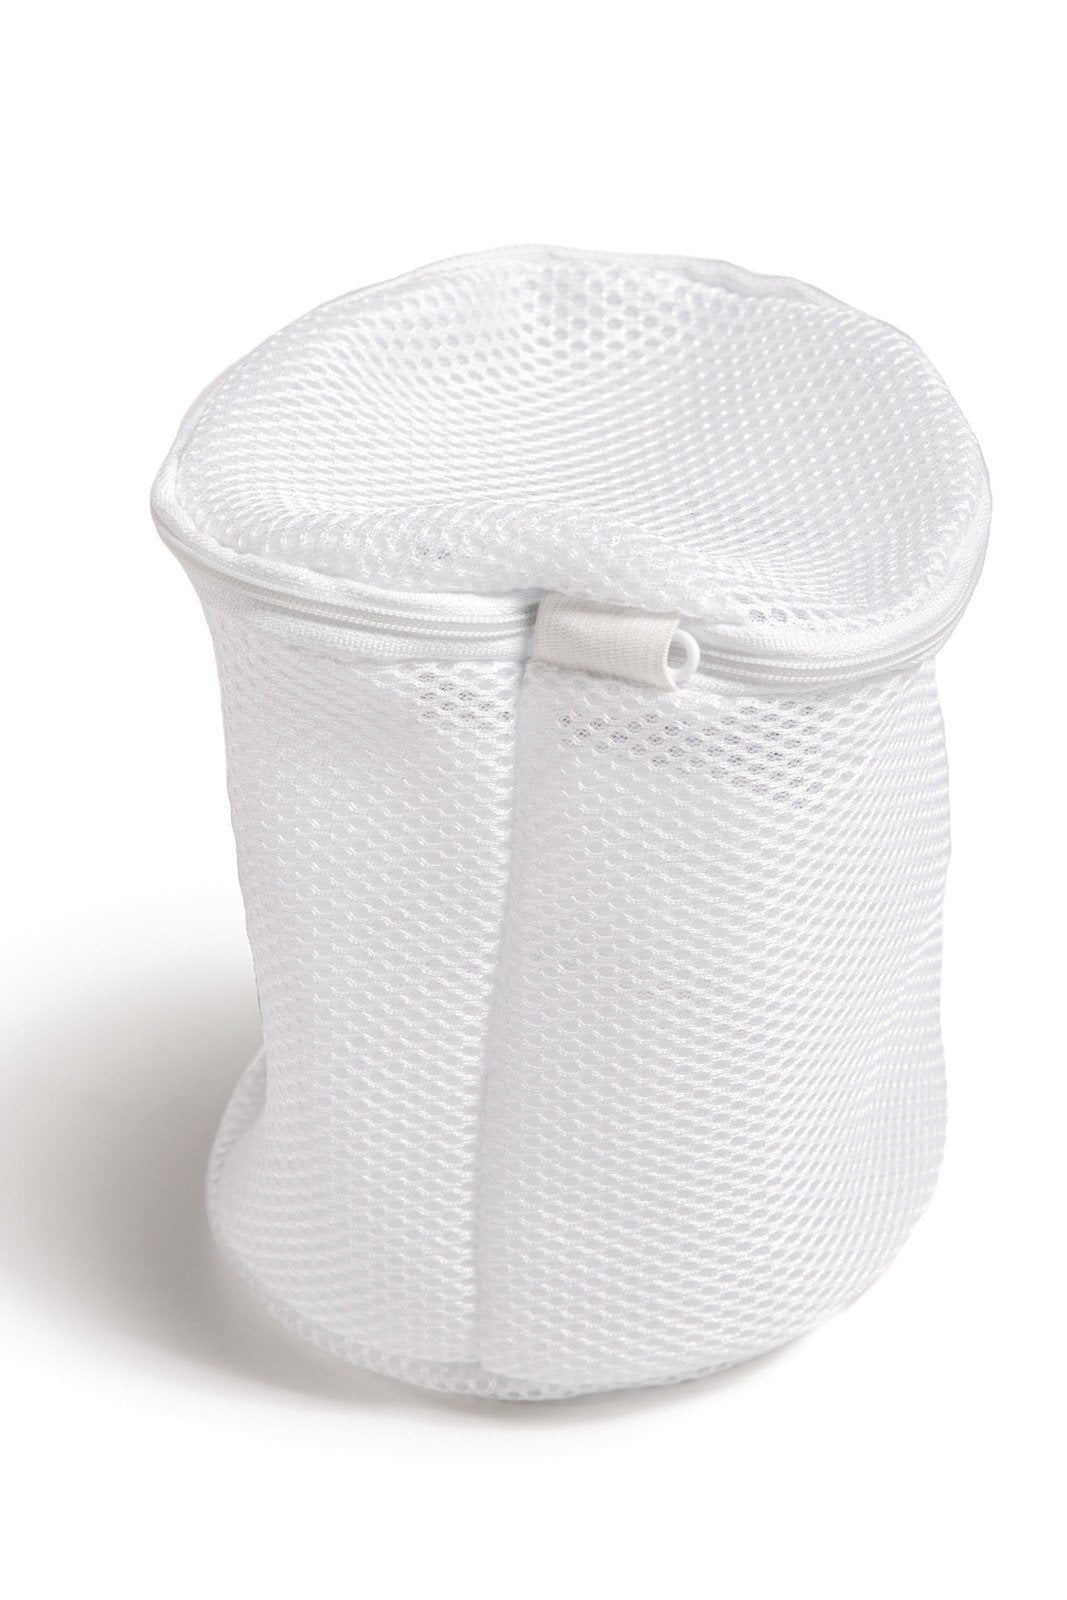 KEREITH Laundry Saver Bag, Mesh Dedicates Bra Washing Bag with Zipper Set  of 5, Lingerie Garment Bag for Washer Dryer Wash Machine Protect Underwear